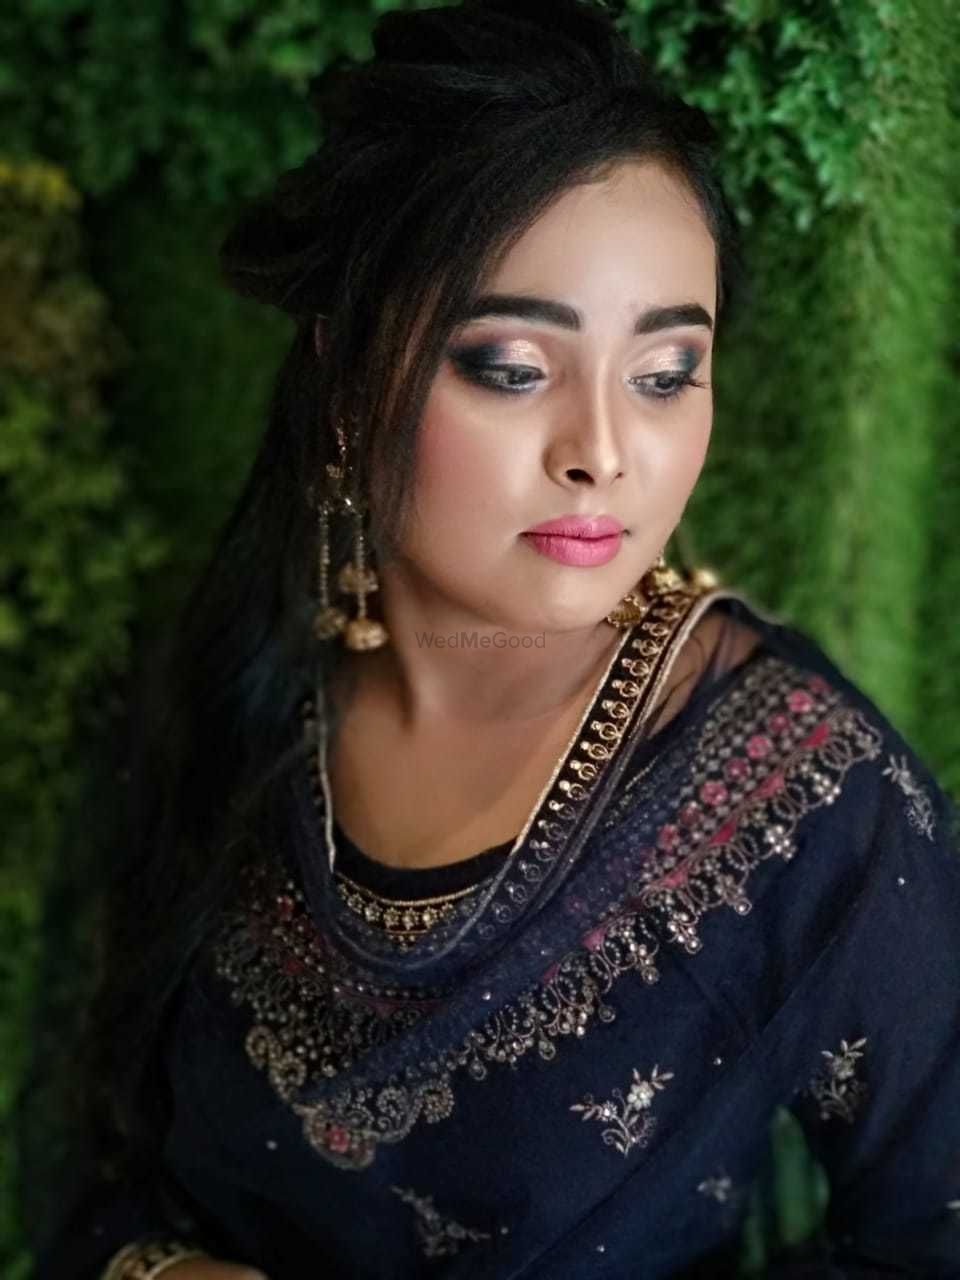 Photo By Sandeep Muartistry - Bridal Makeup